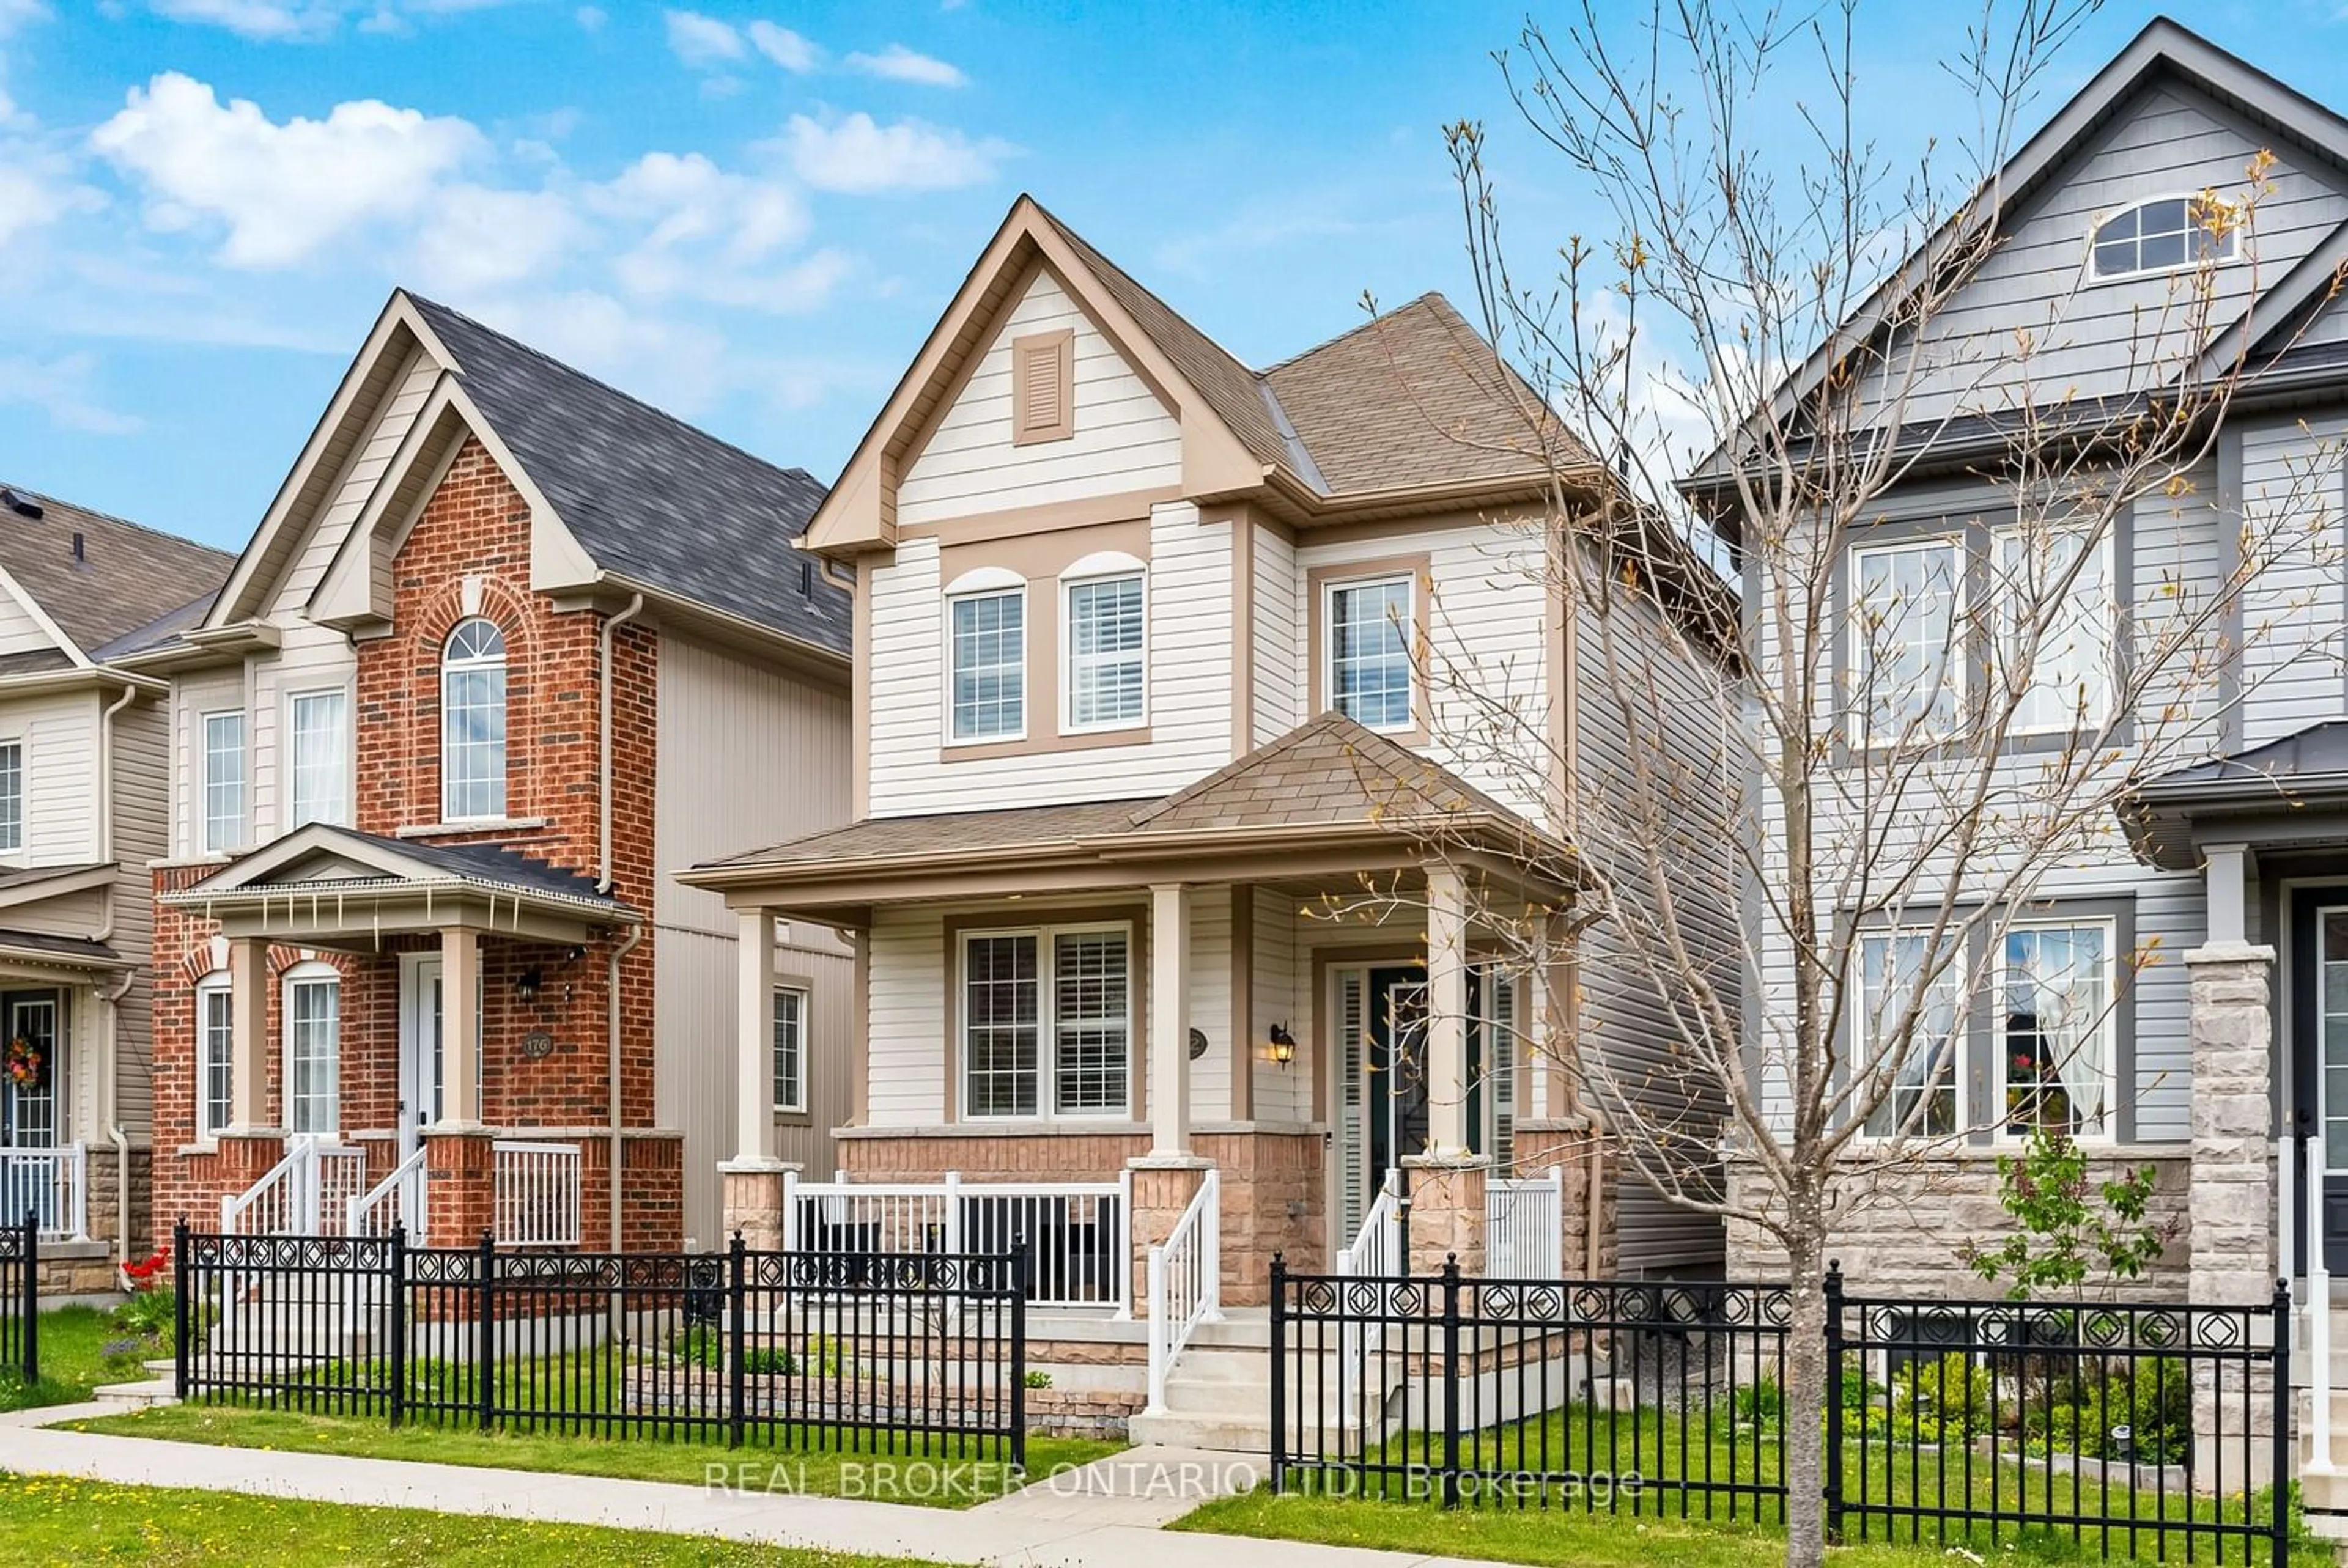 Home with brick exterior material for 172 Mcbride Ave, Clarington Ontario L1C 0J4